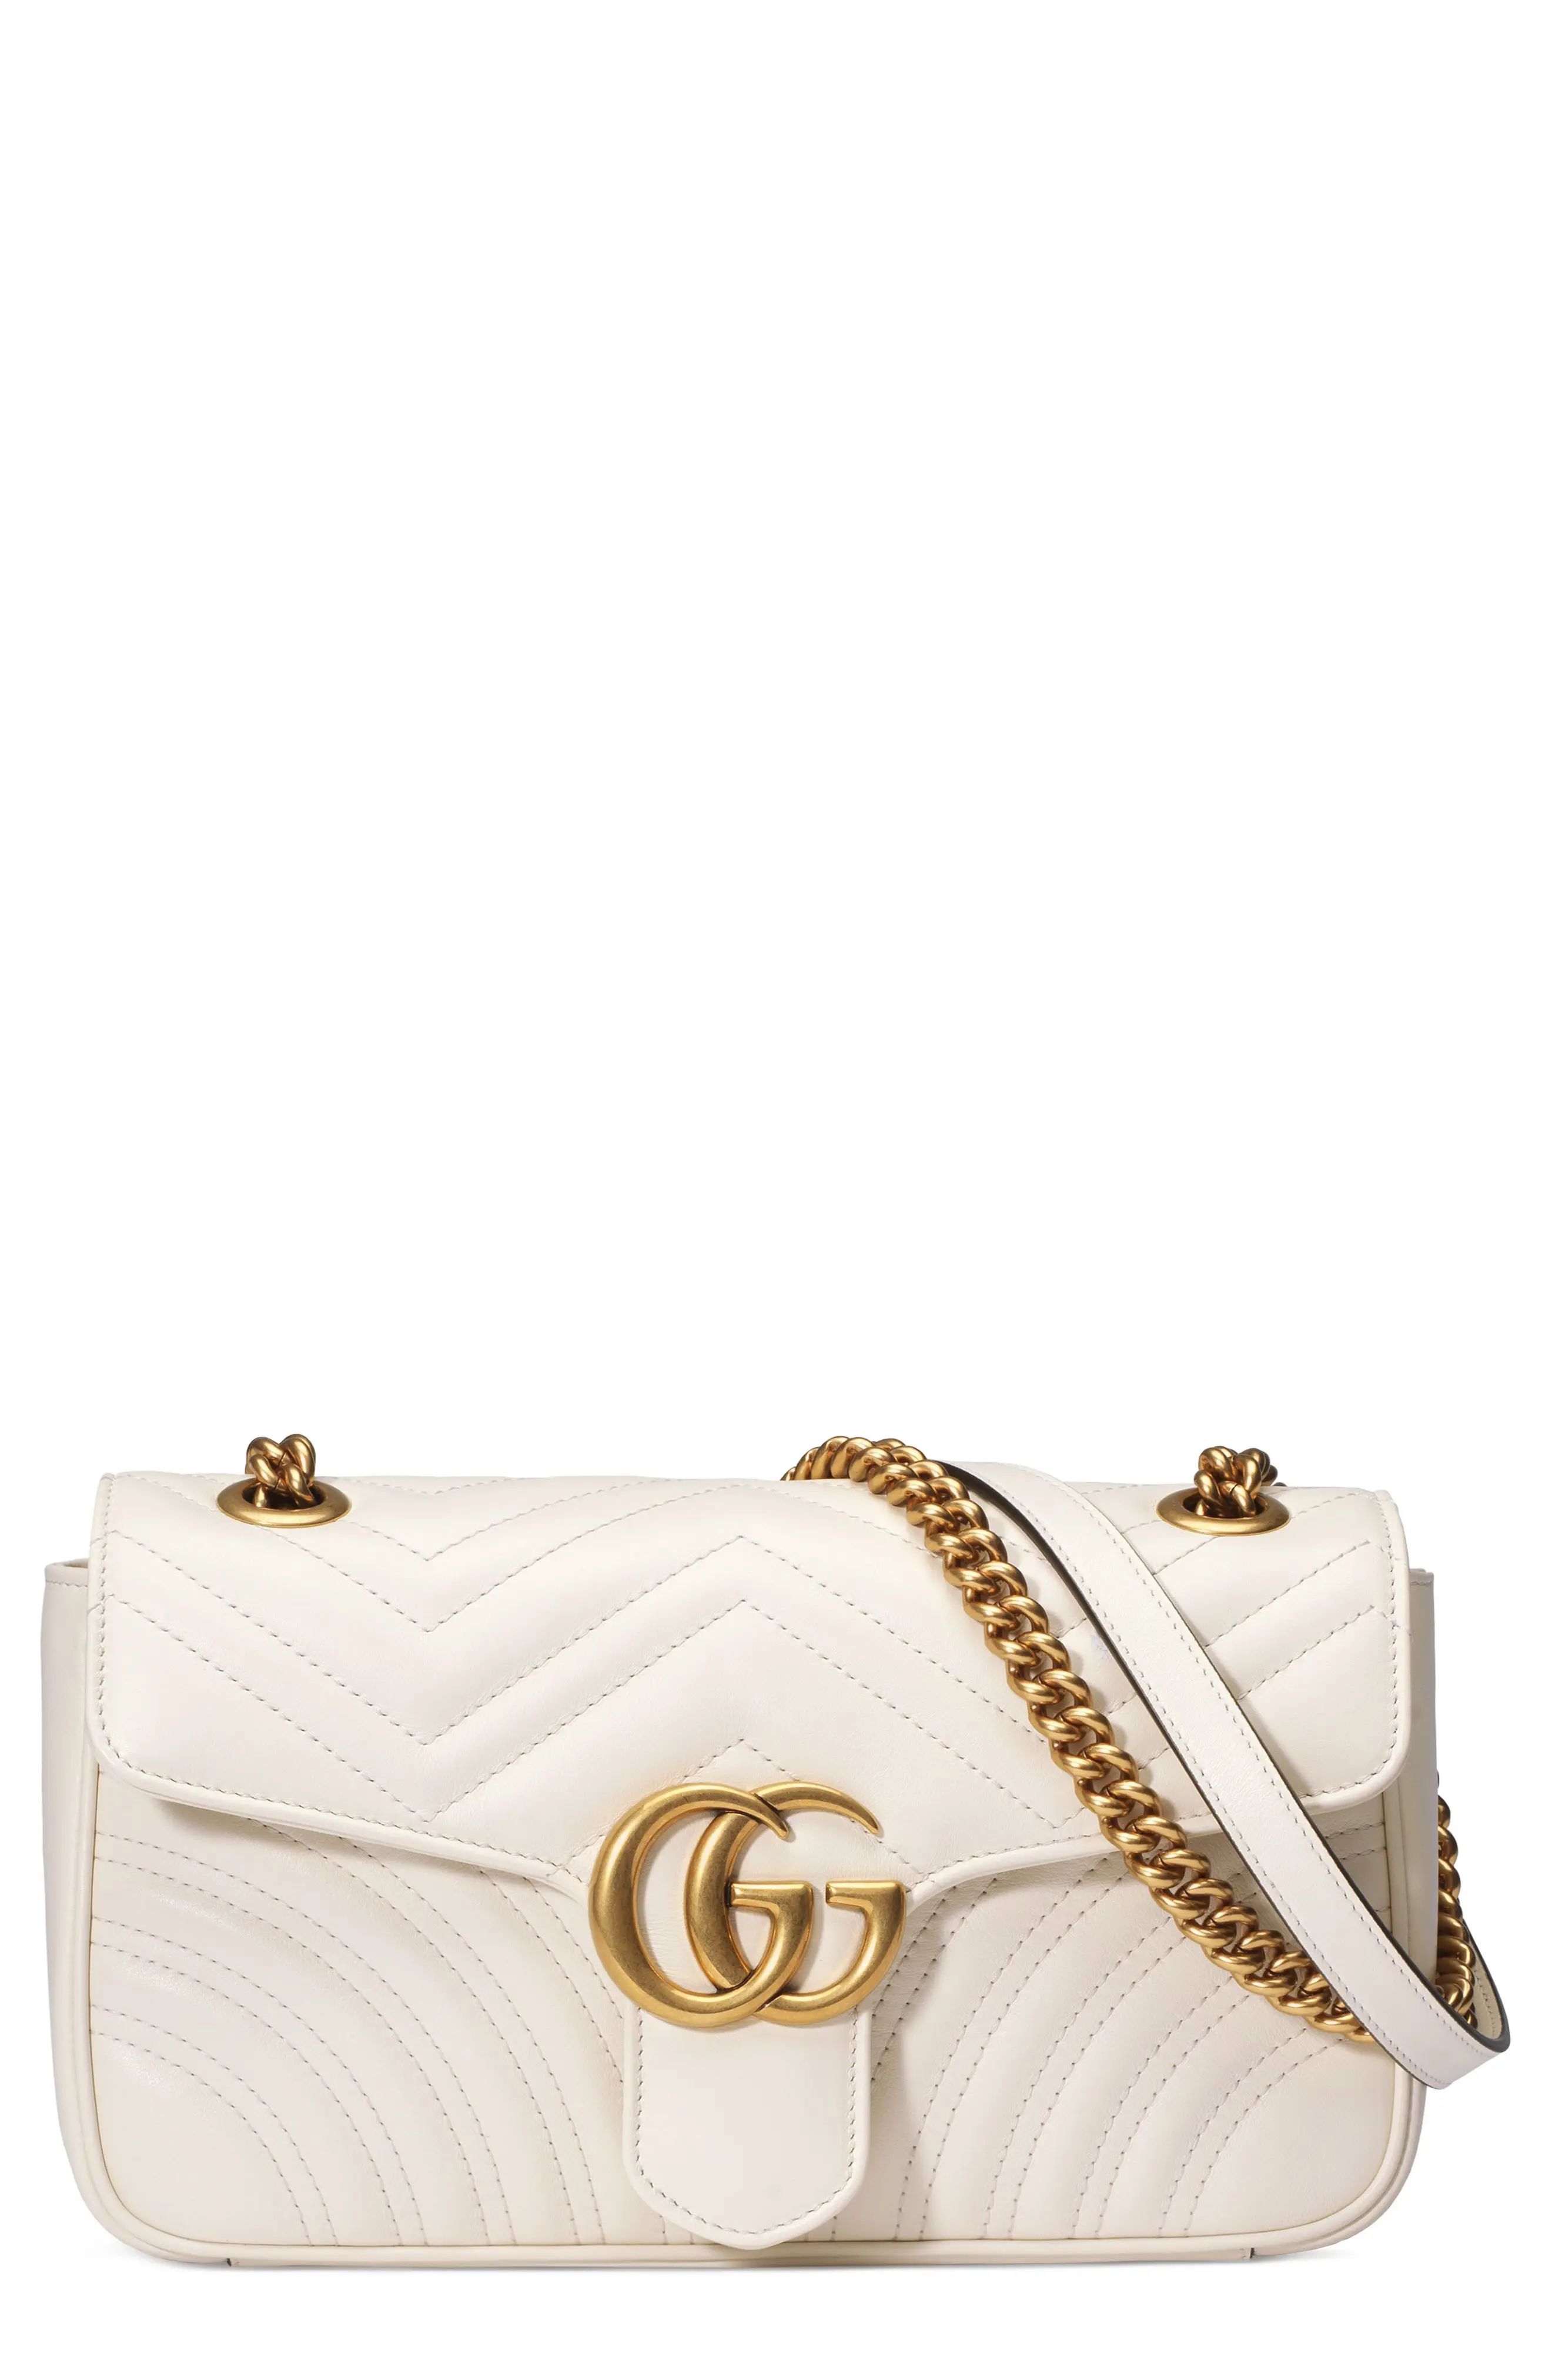 Gucci Small Matelasse Leather Shoulder Bag - White | Nordstrom